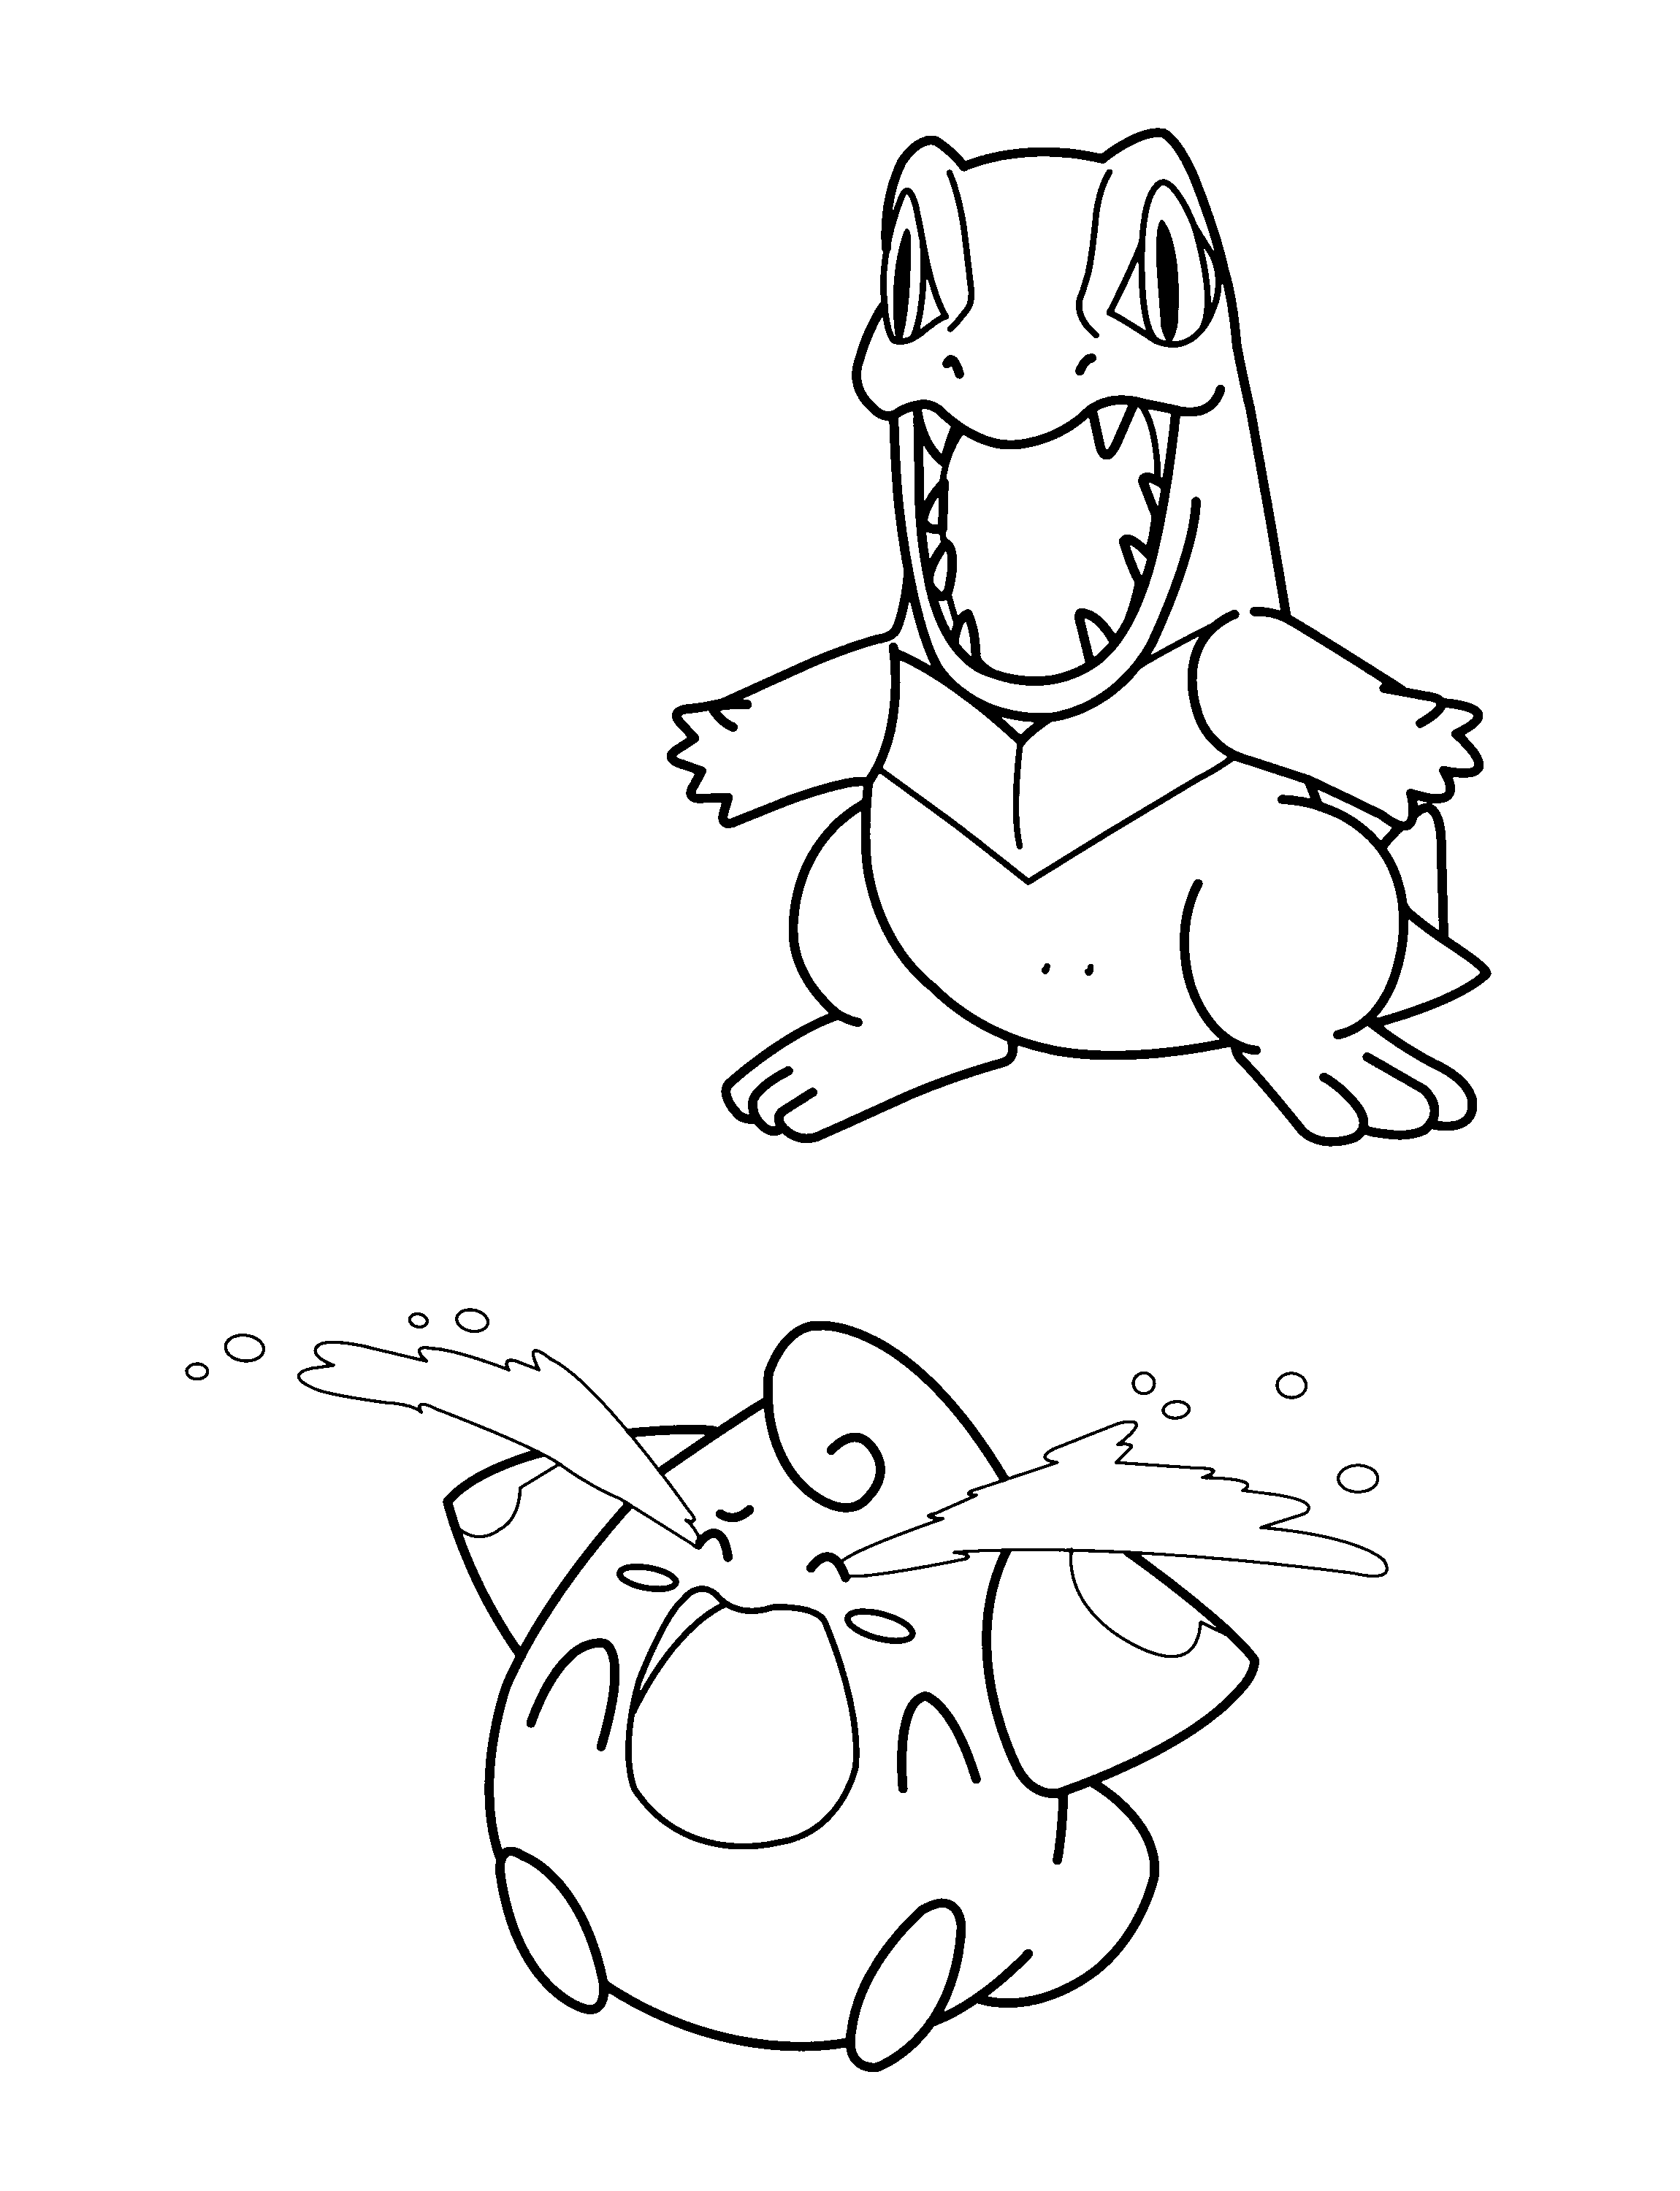 Pokemon